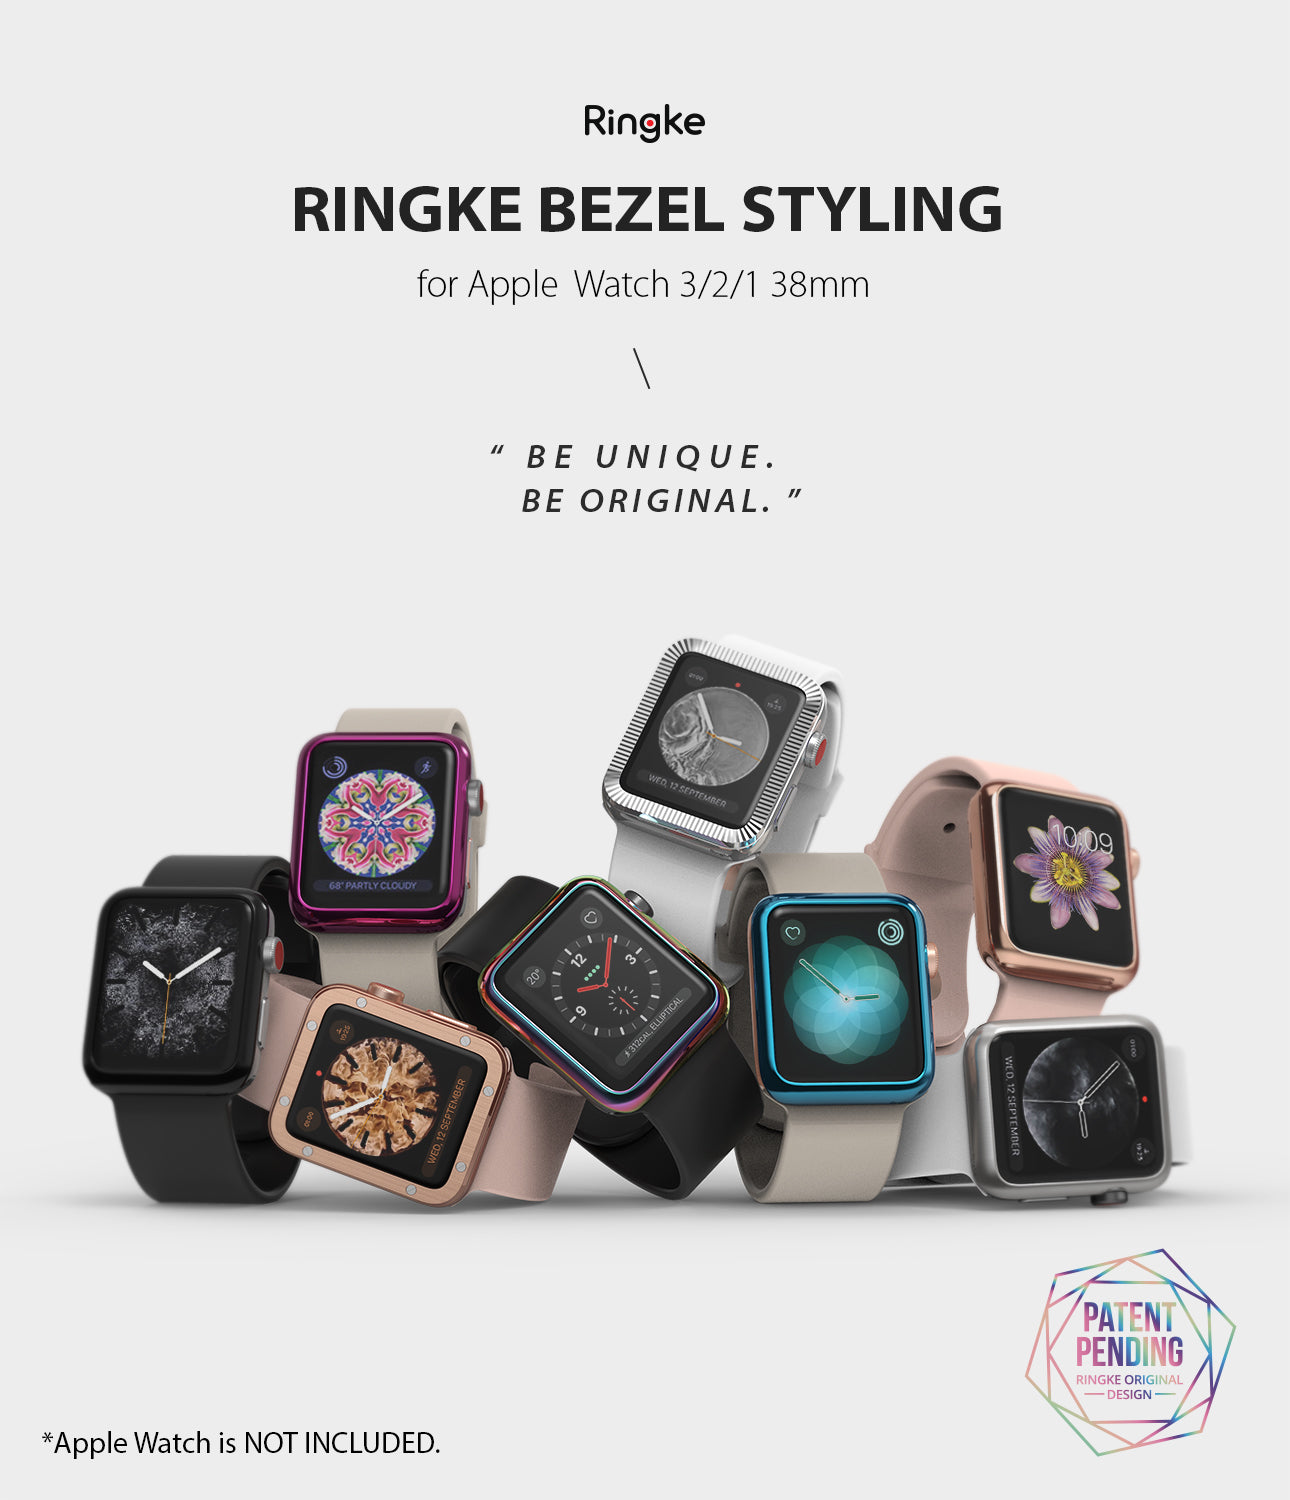 apple watch 3 2 1 38mm case ringke bezel styling stainless steel frame cover 38-04